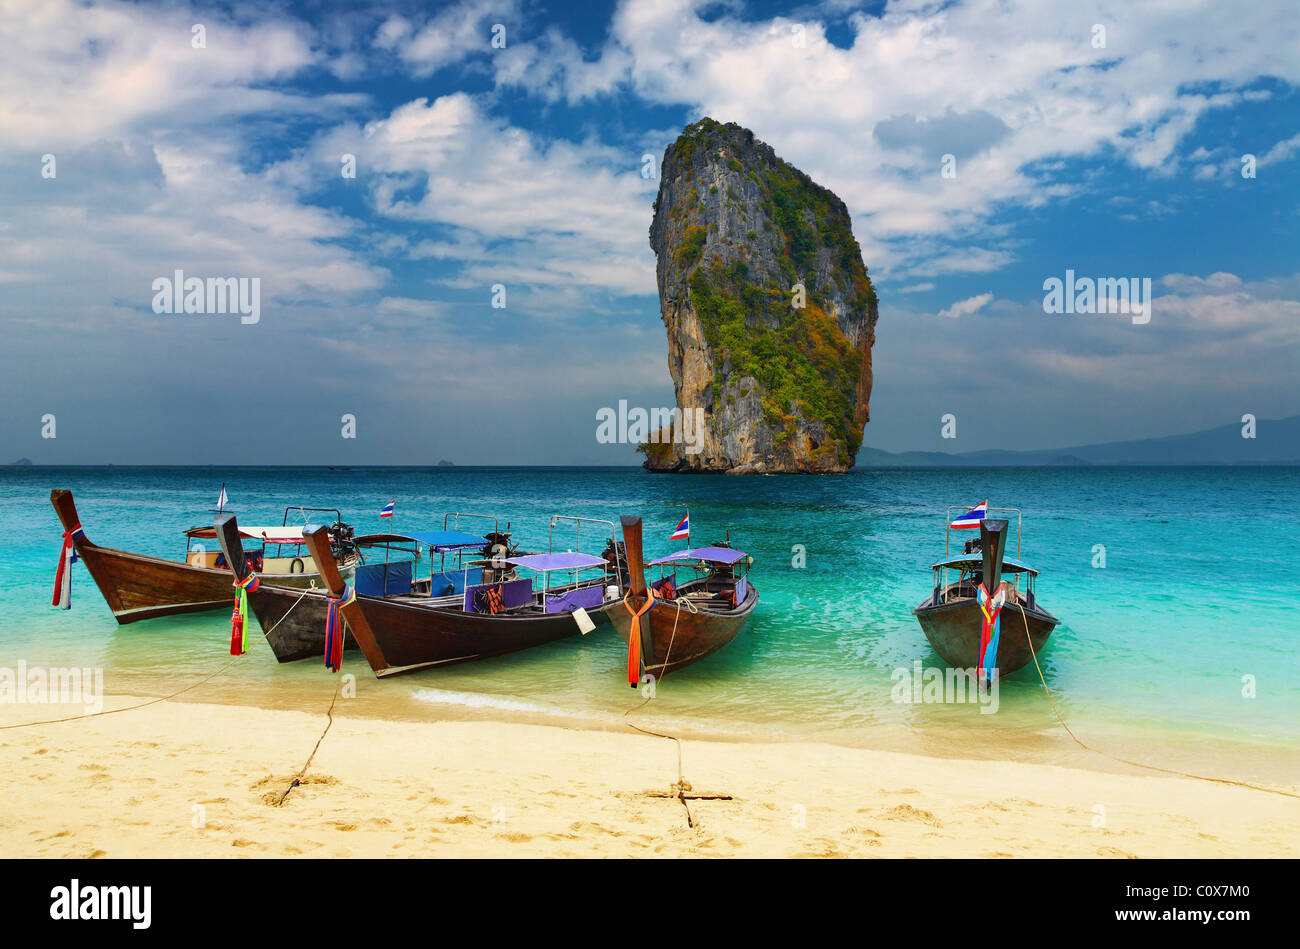 Tropical beach, traditional longtail boats, Andaman Sea, Thailand Stock Photo